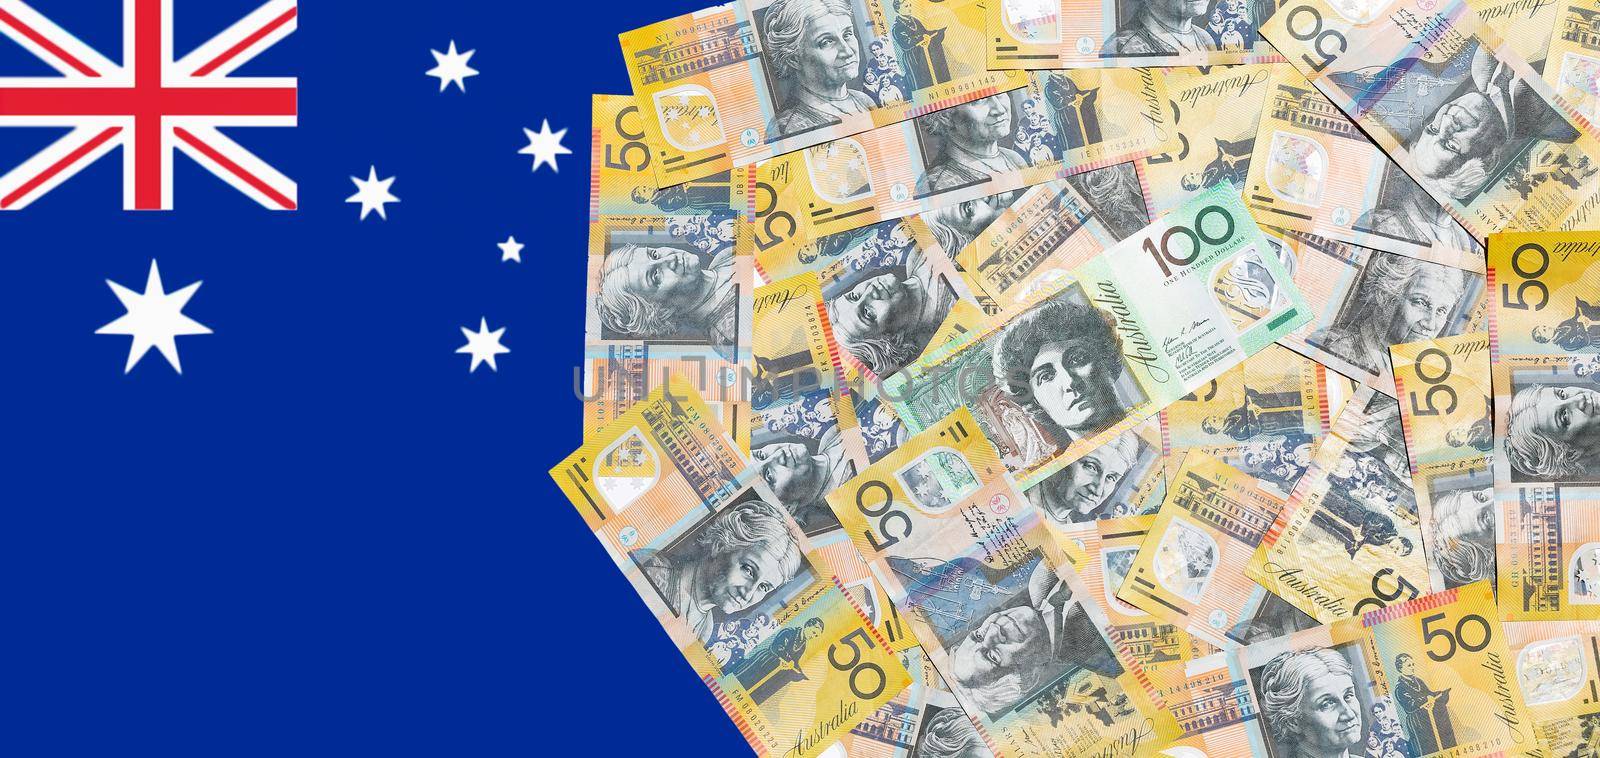 Australian dollar notes by toa55